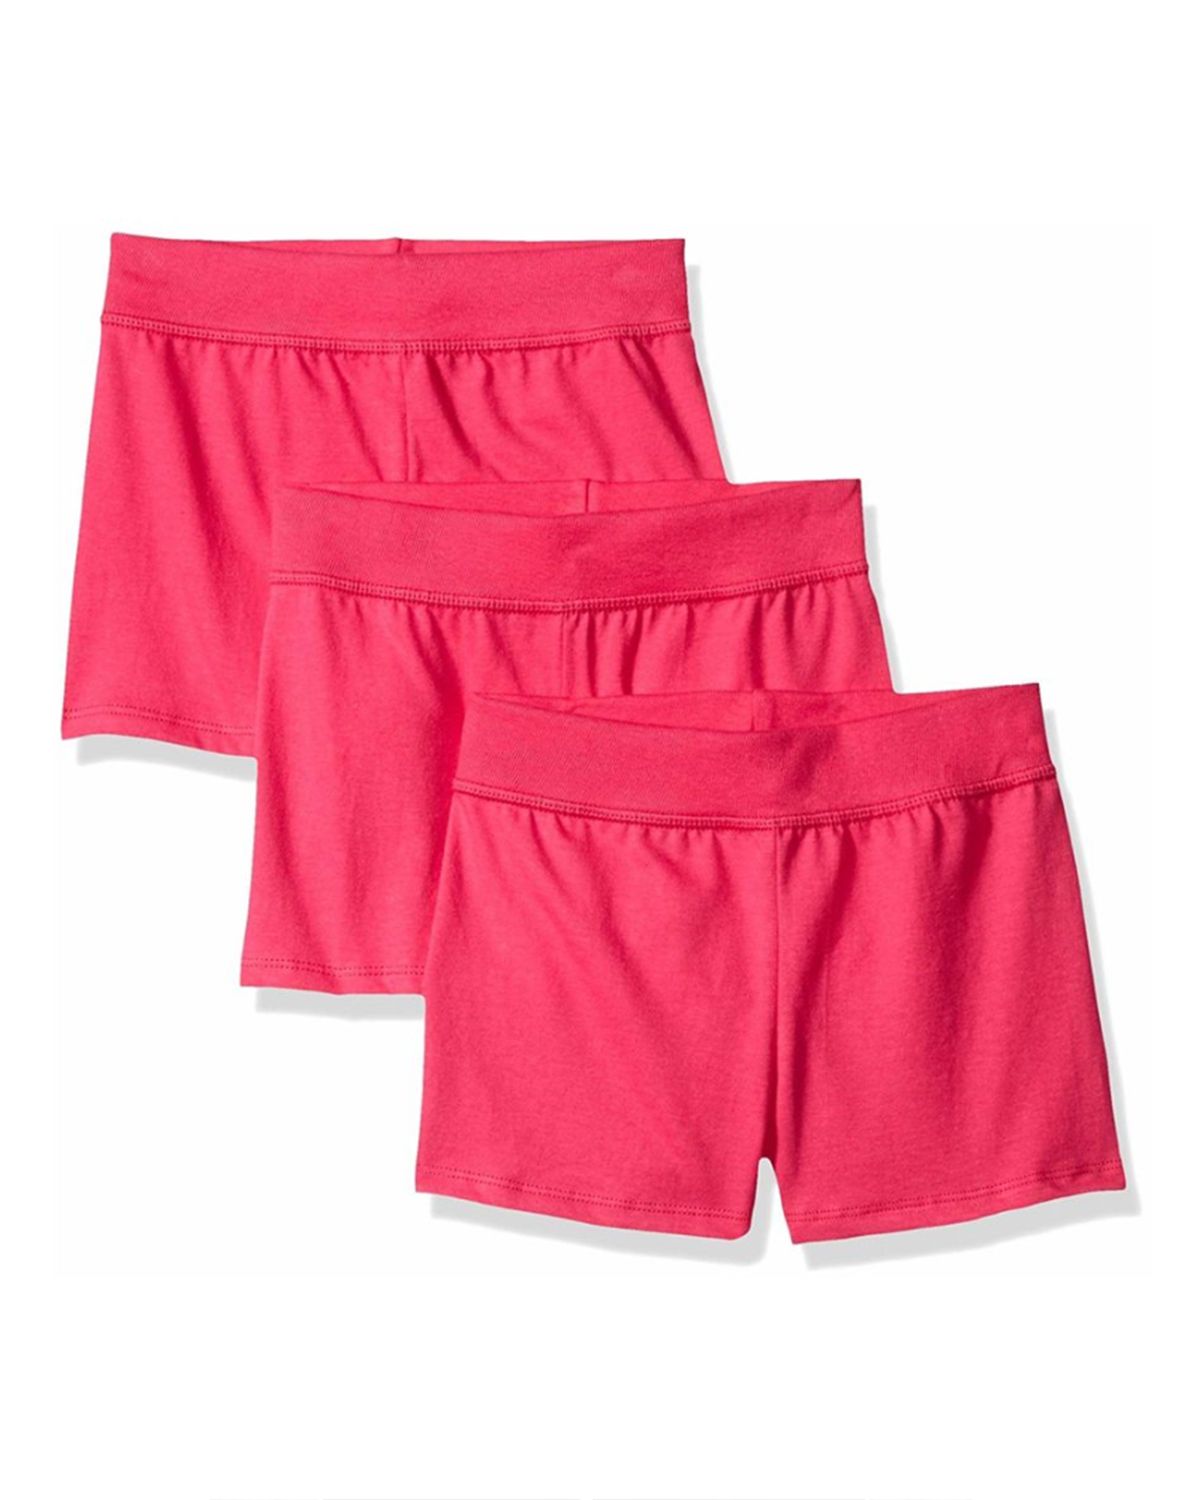 Buy Jersey Shorts for Men & Women | ApparelnBags.com